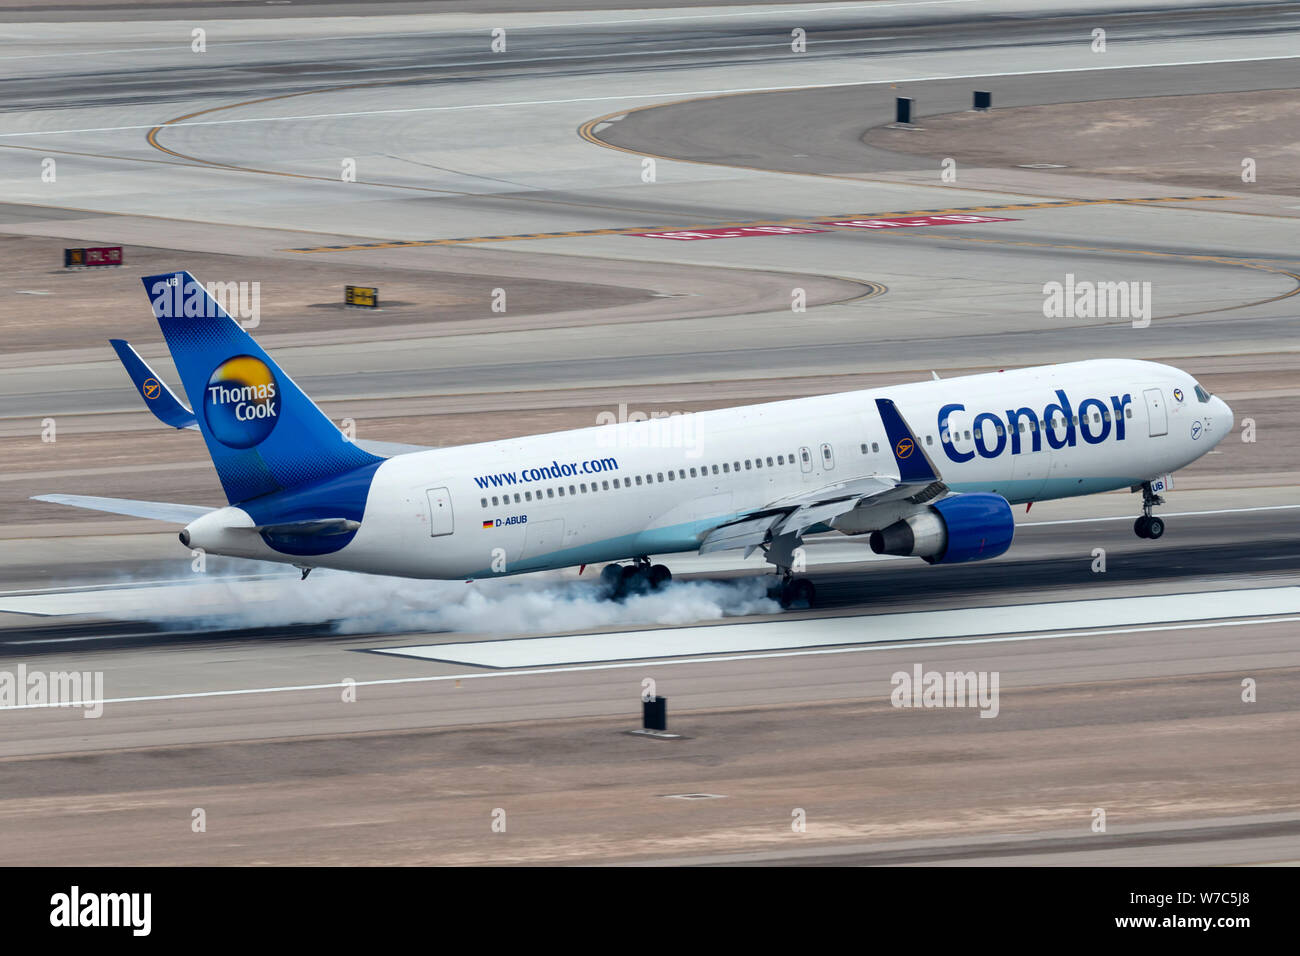 Condor Boeing 767 airliner arriving at McCarran International Airport Las  Vegas Stock Photo - Alamy